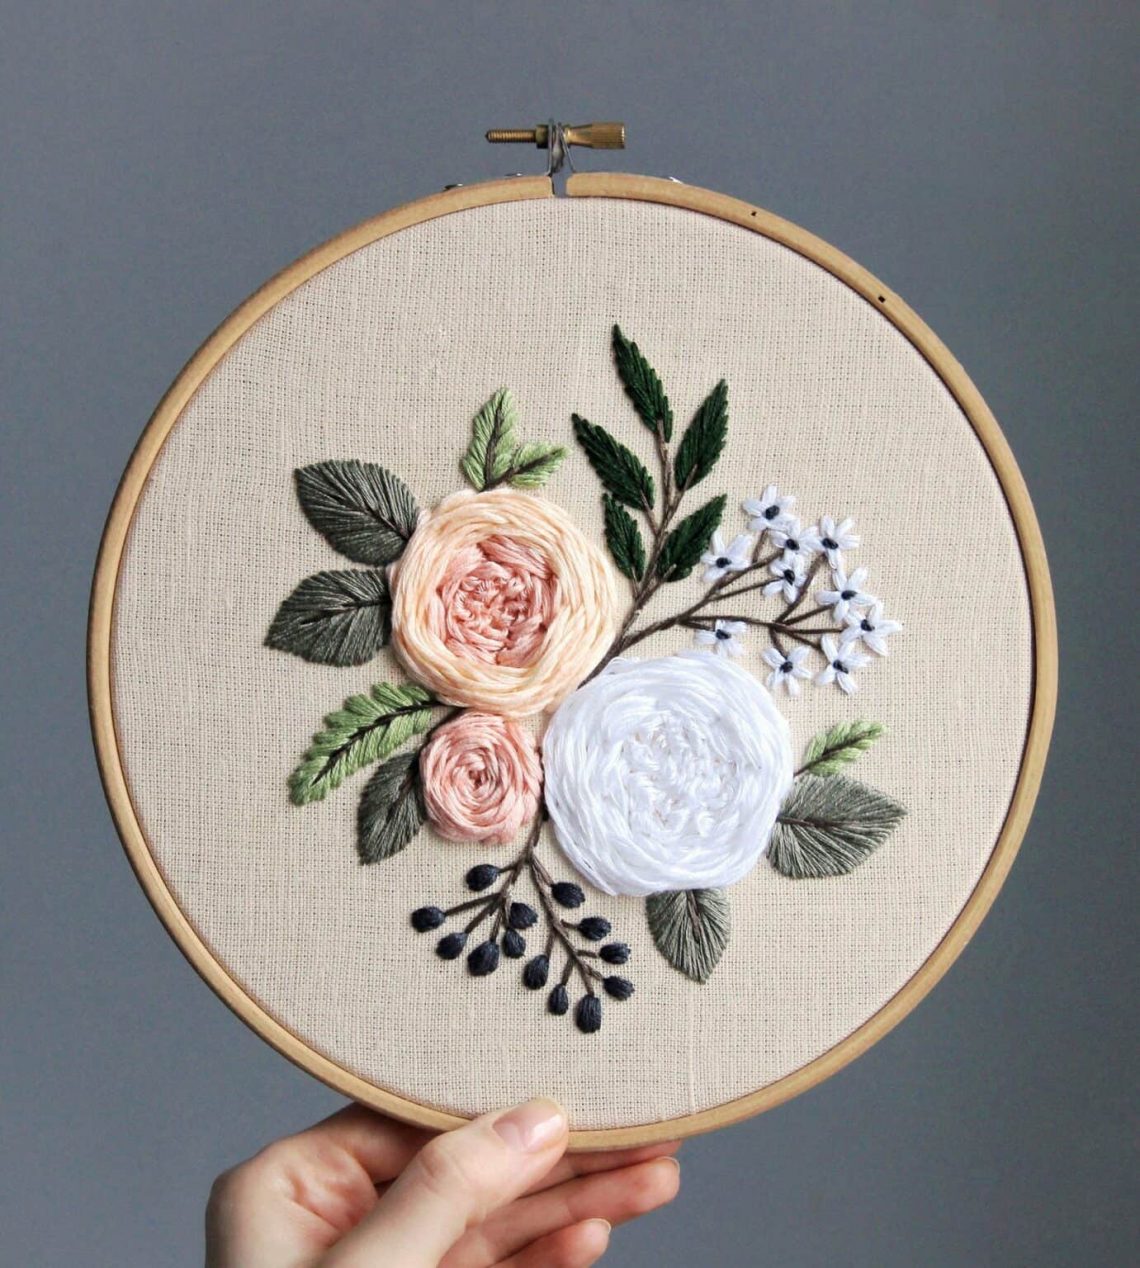 13 Awesome Flower Embroidery Patterns - DIYCraftsGuru